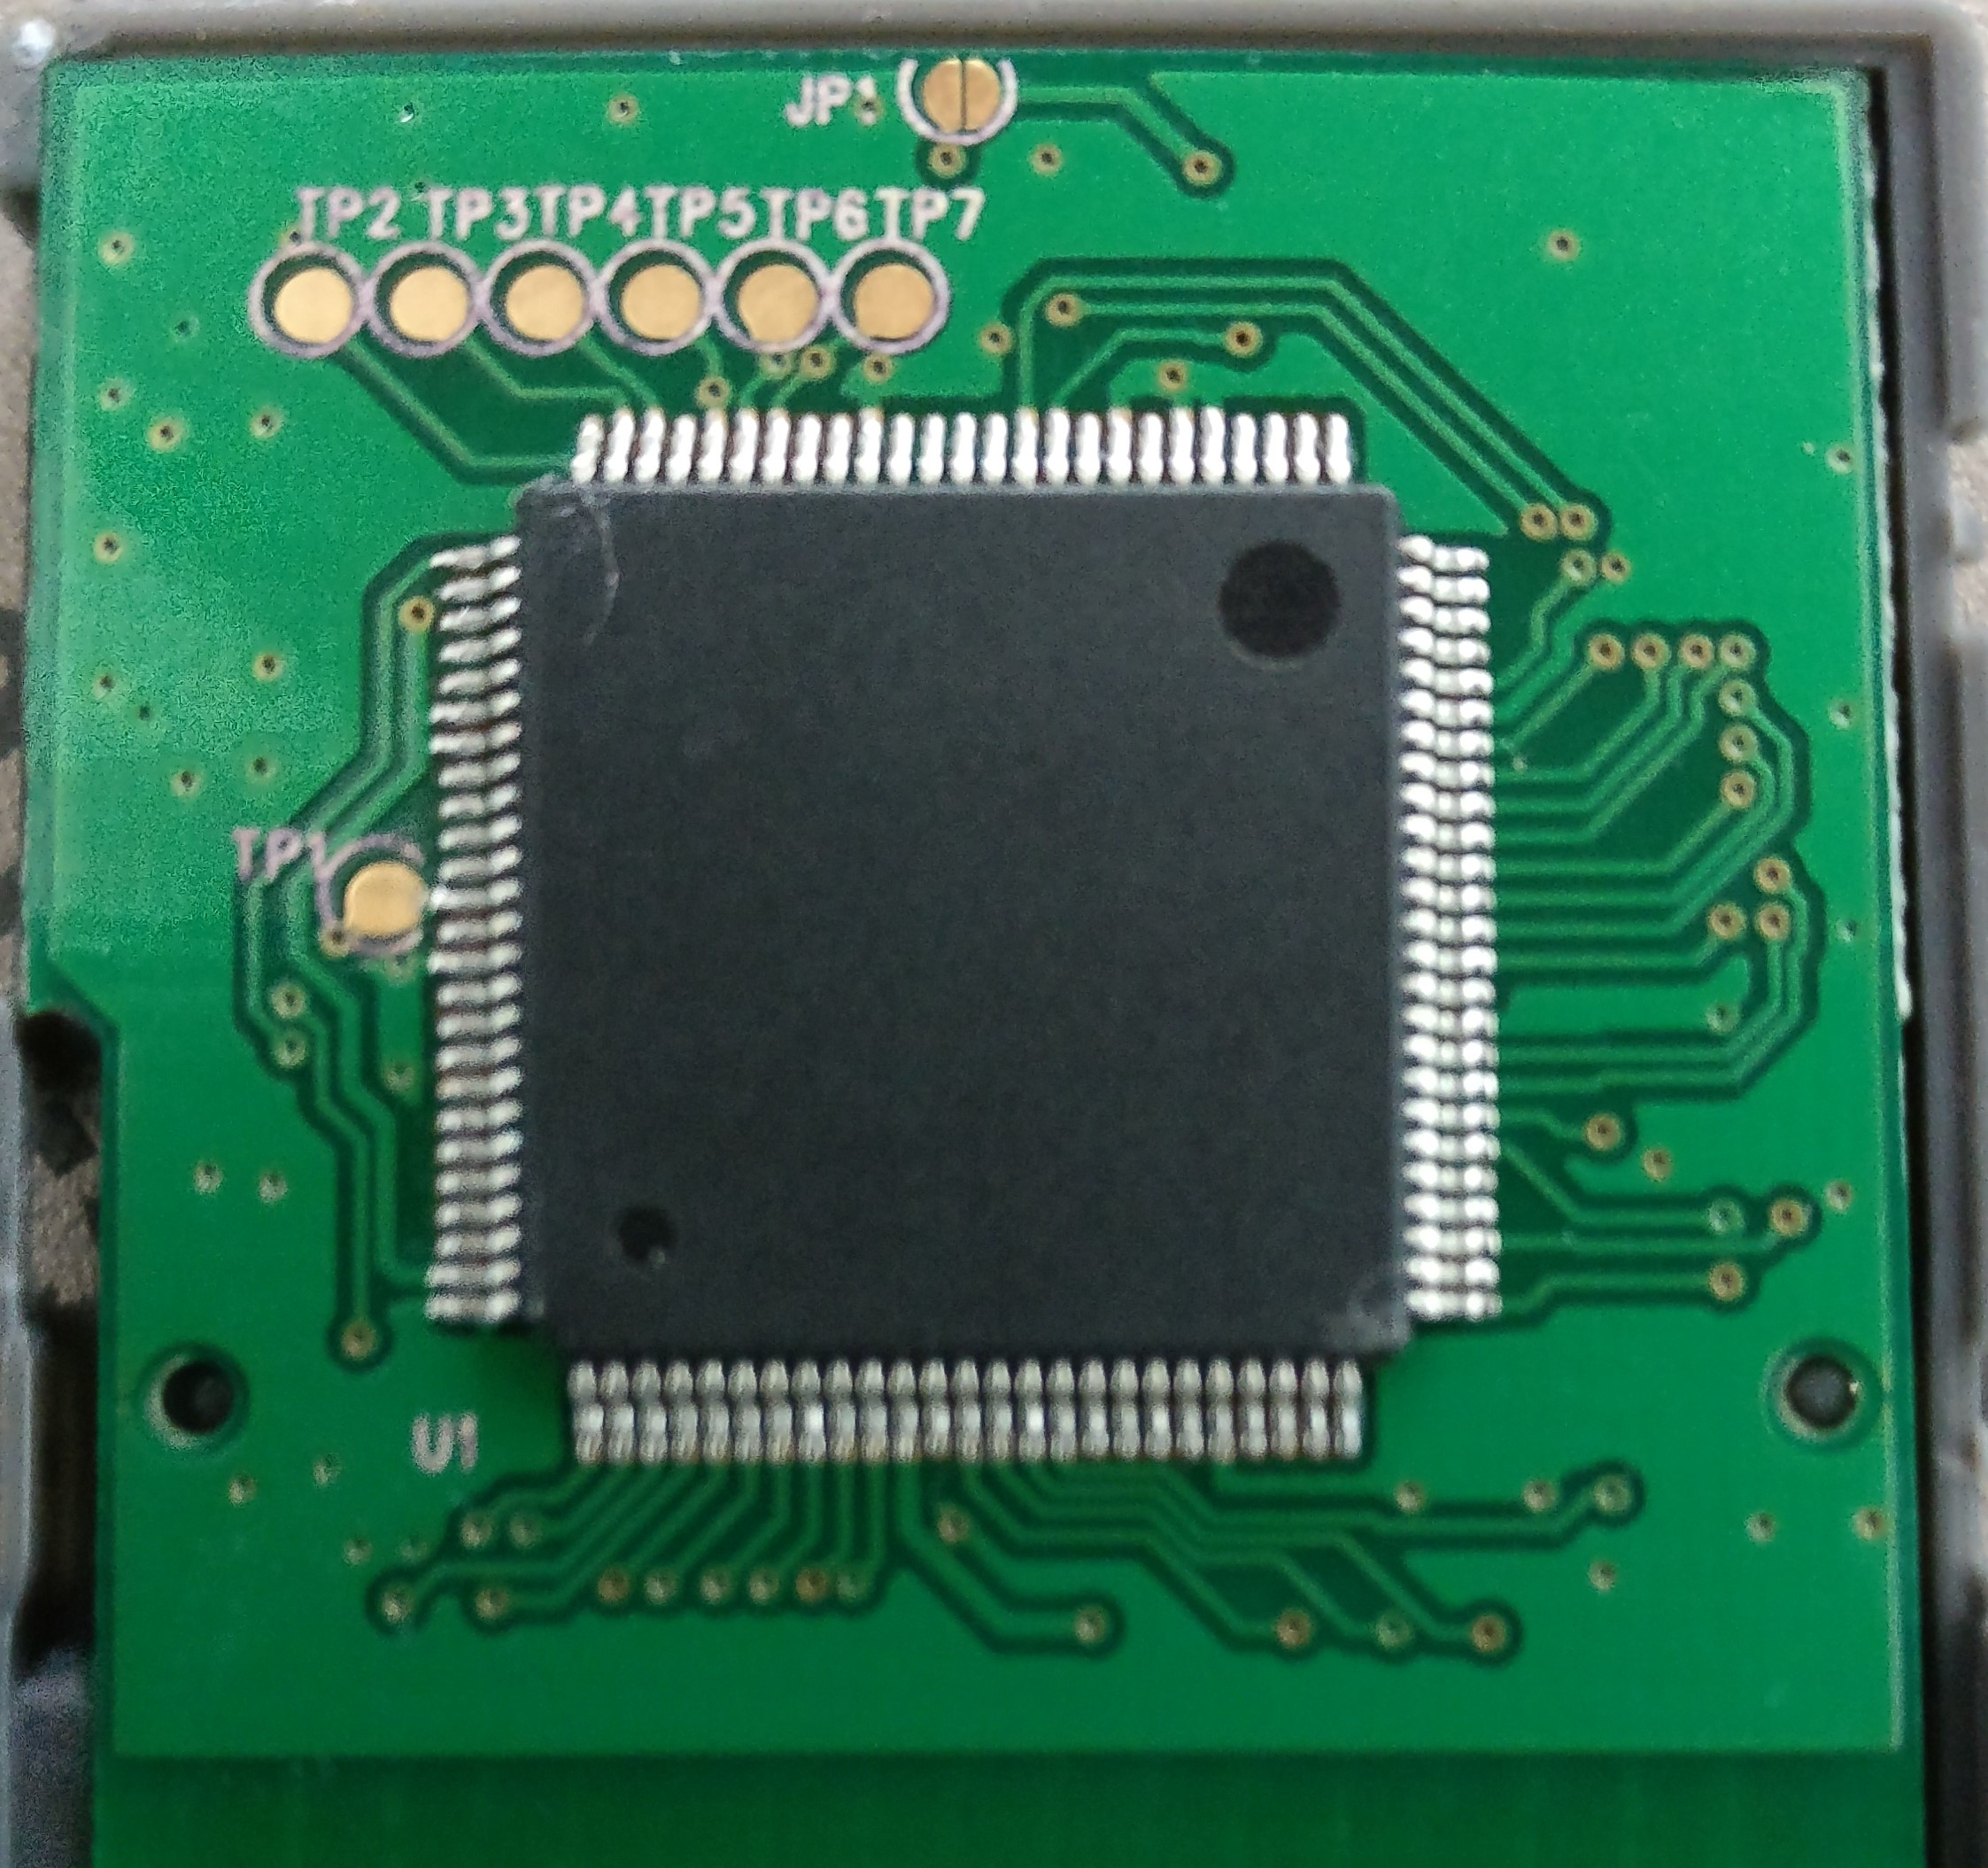 Image of the FPGA